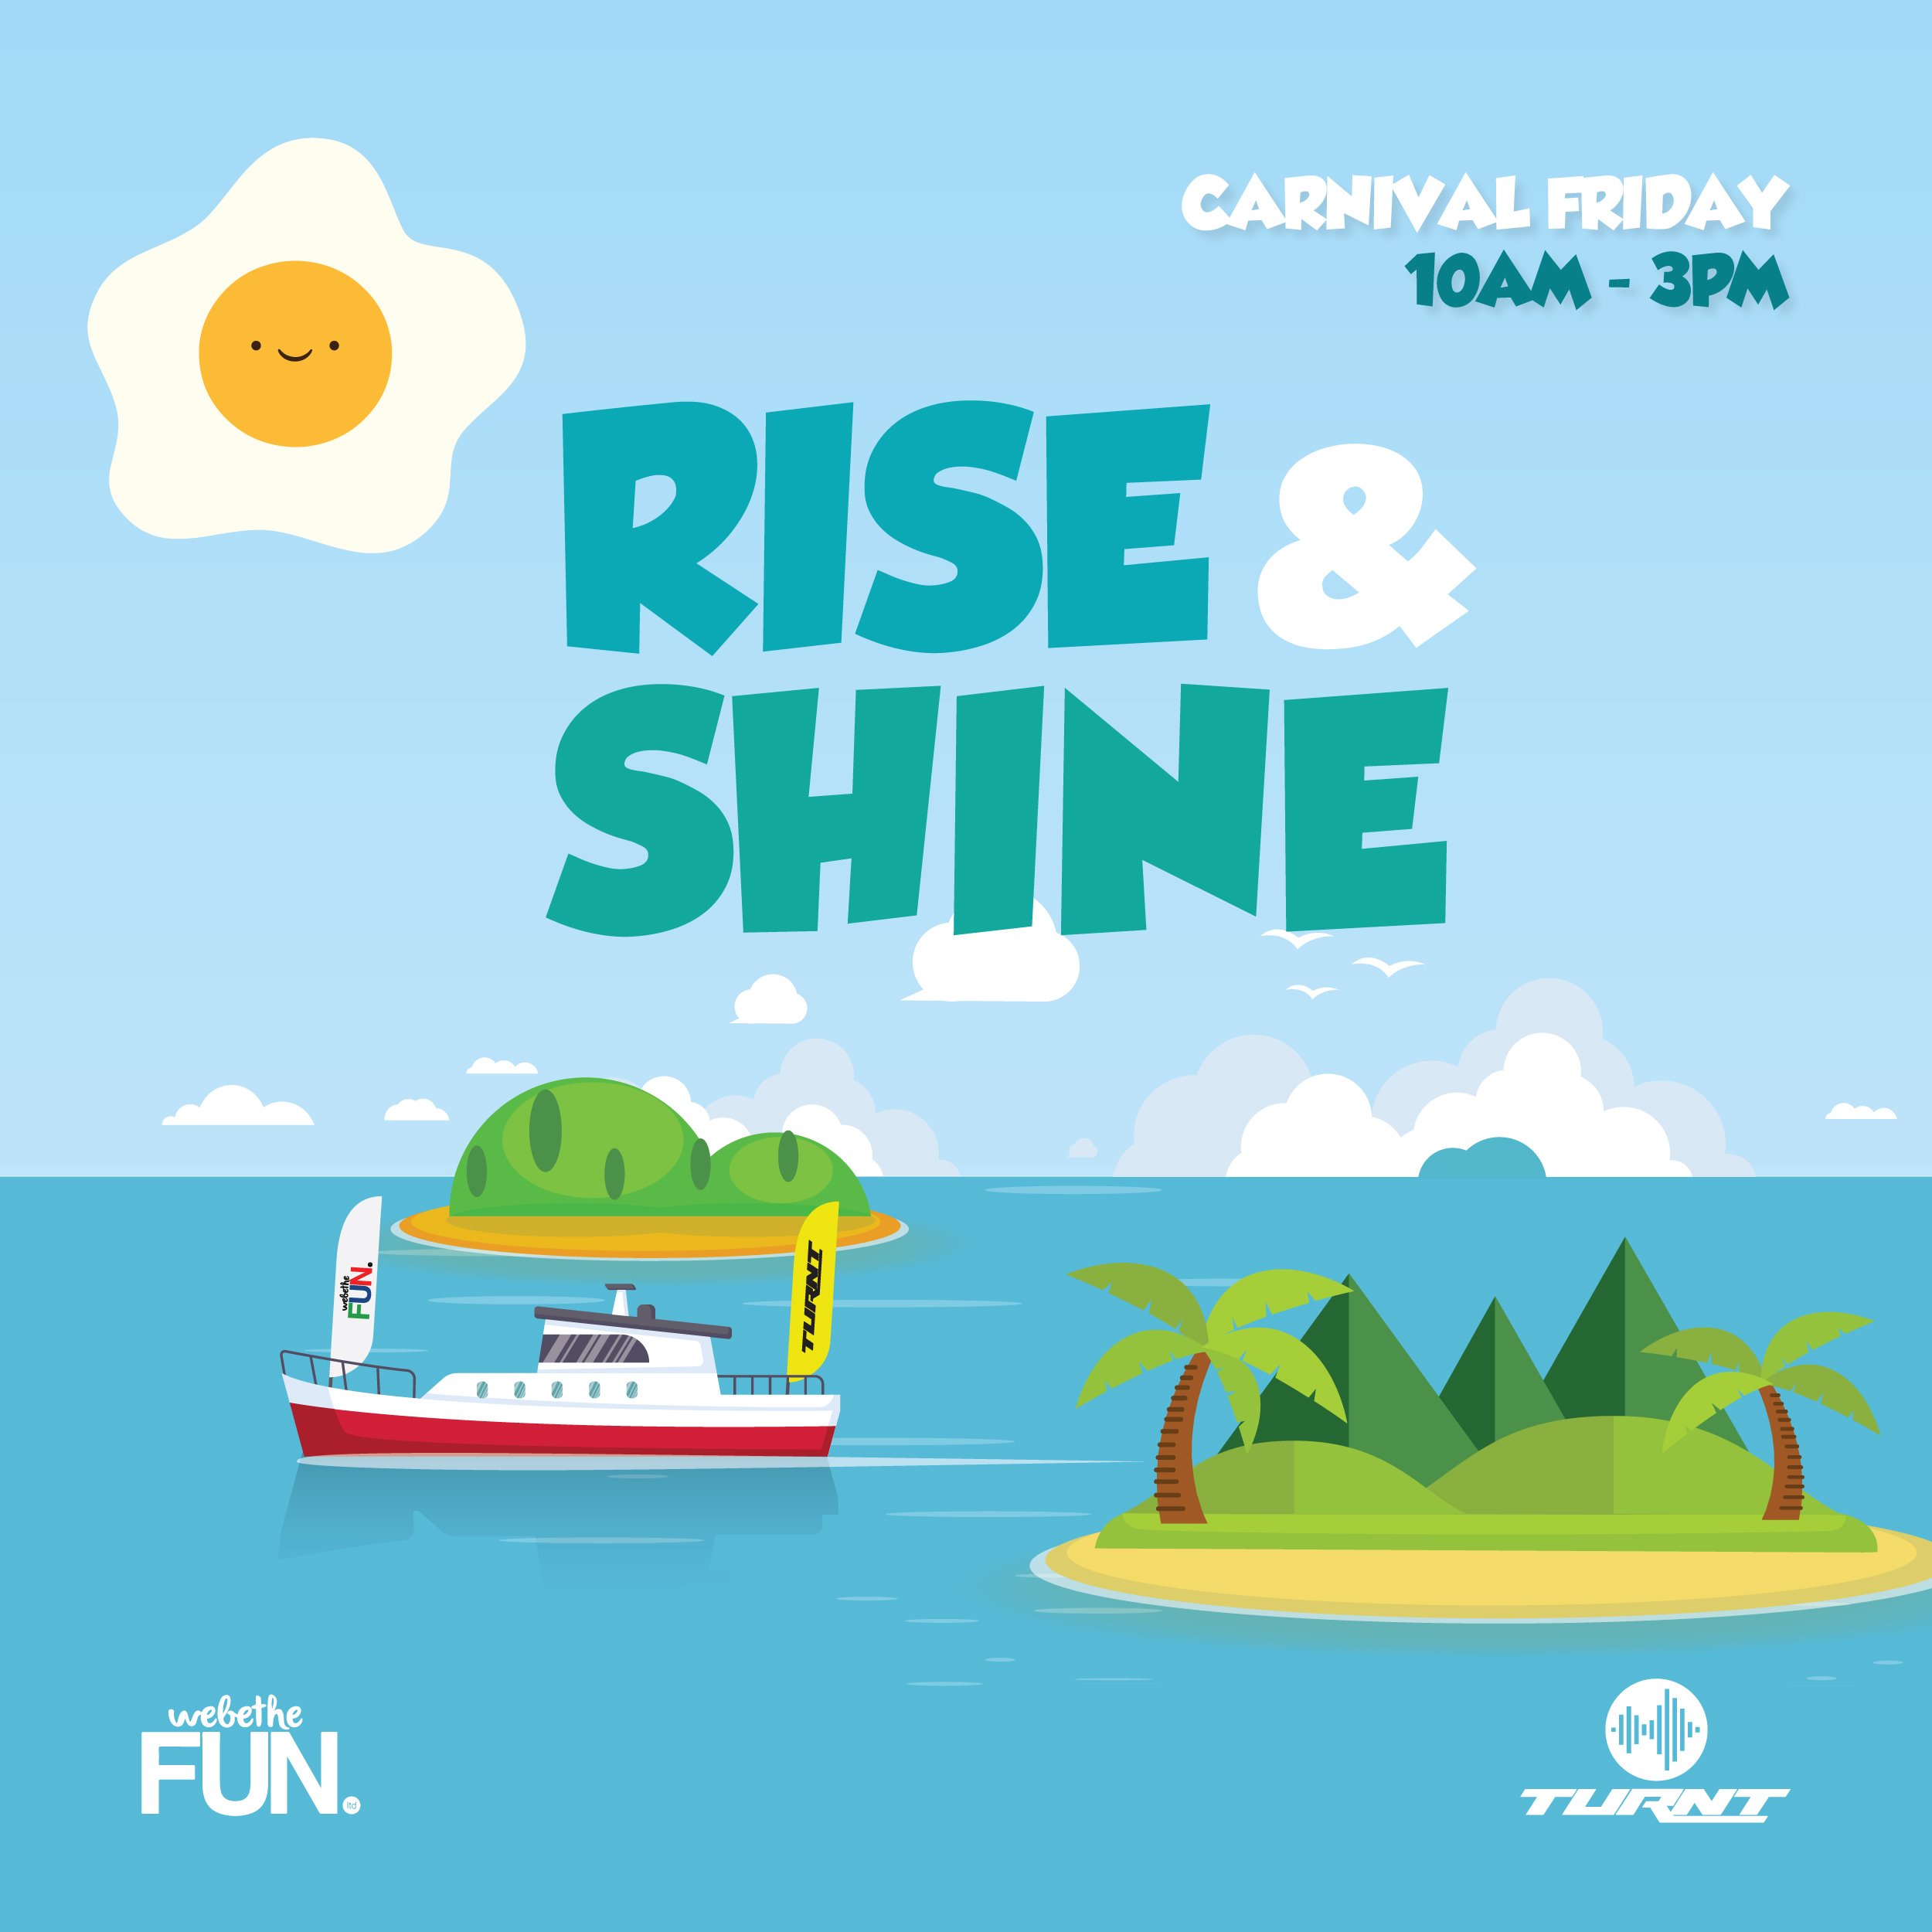 RISE & SHINE - Carnival Friday